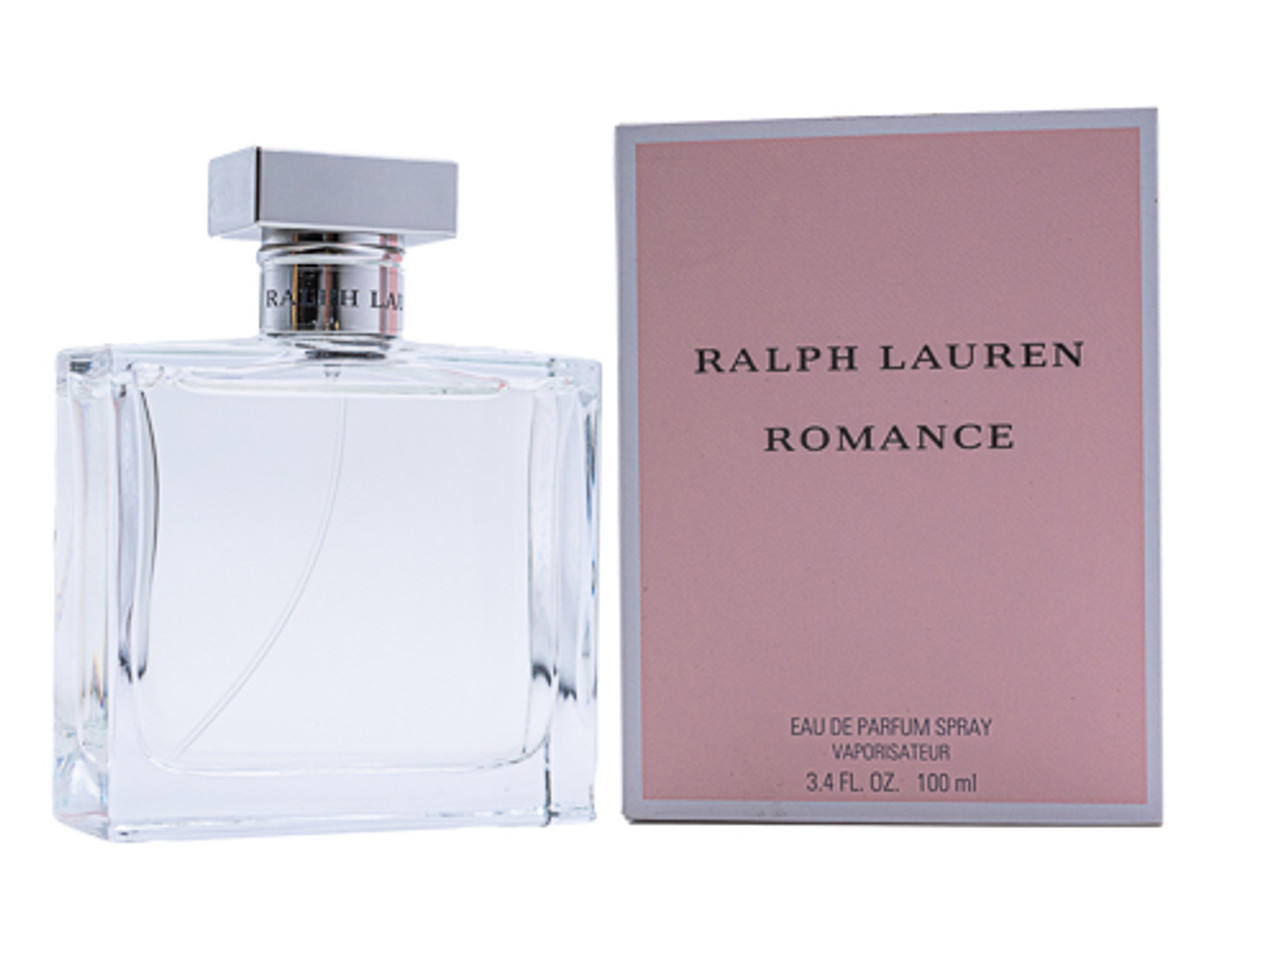 Romance by Ralph Lauren 3.4 oz EDP for women